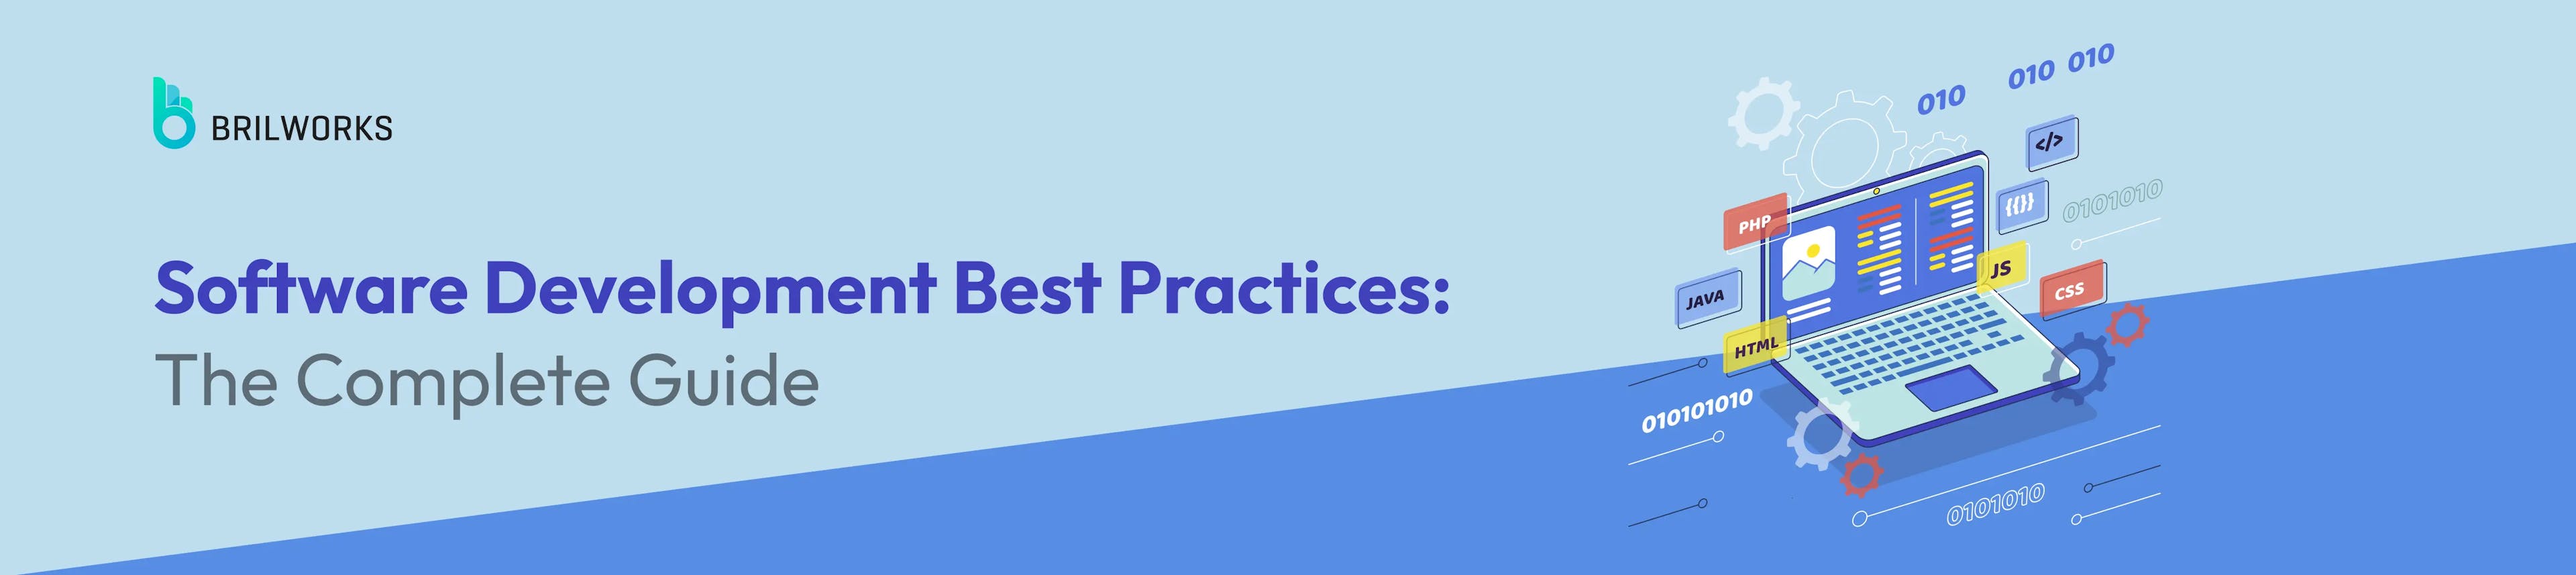 Banner-Software Development Best Practices